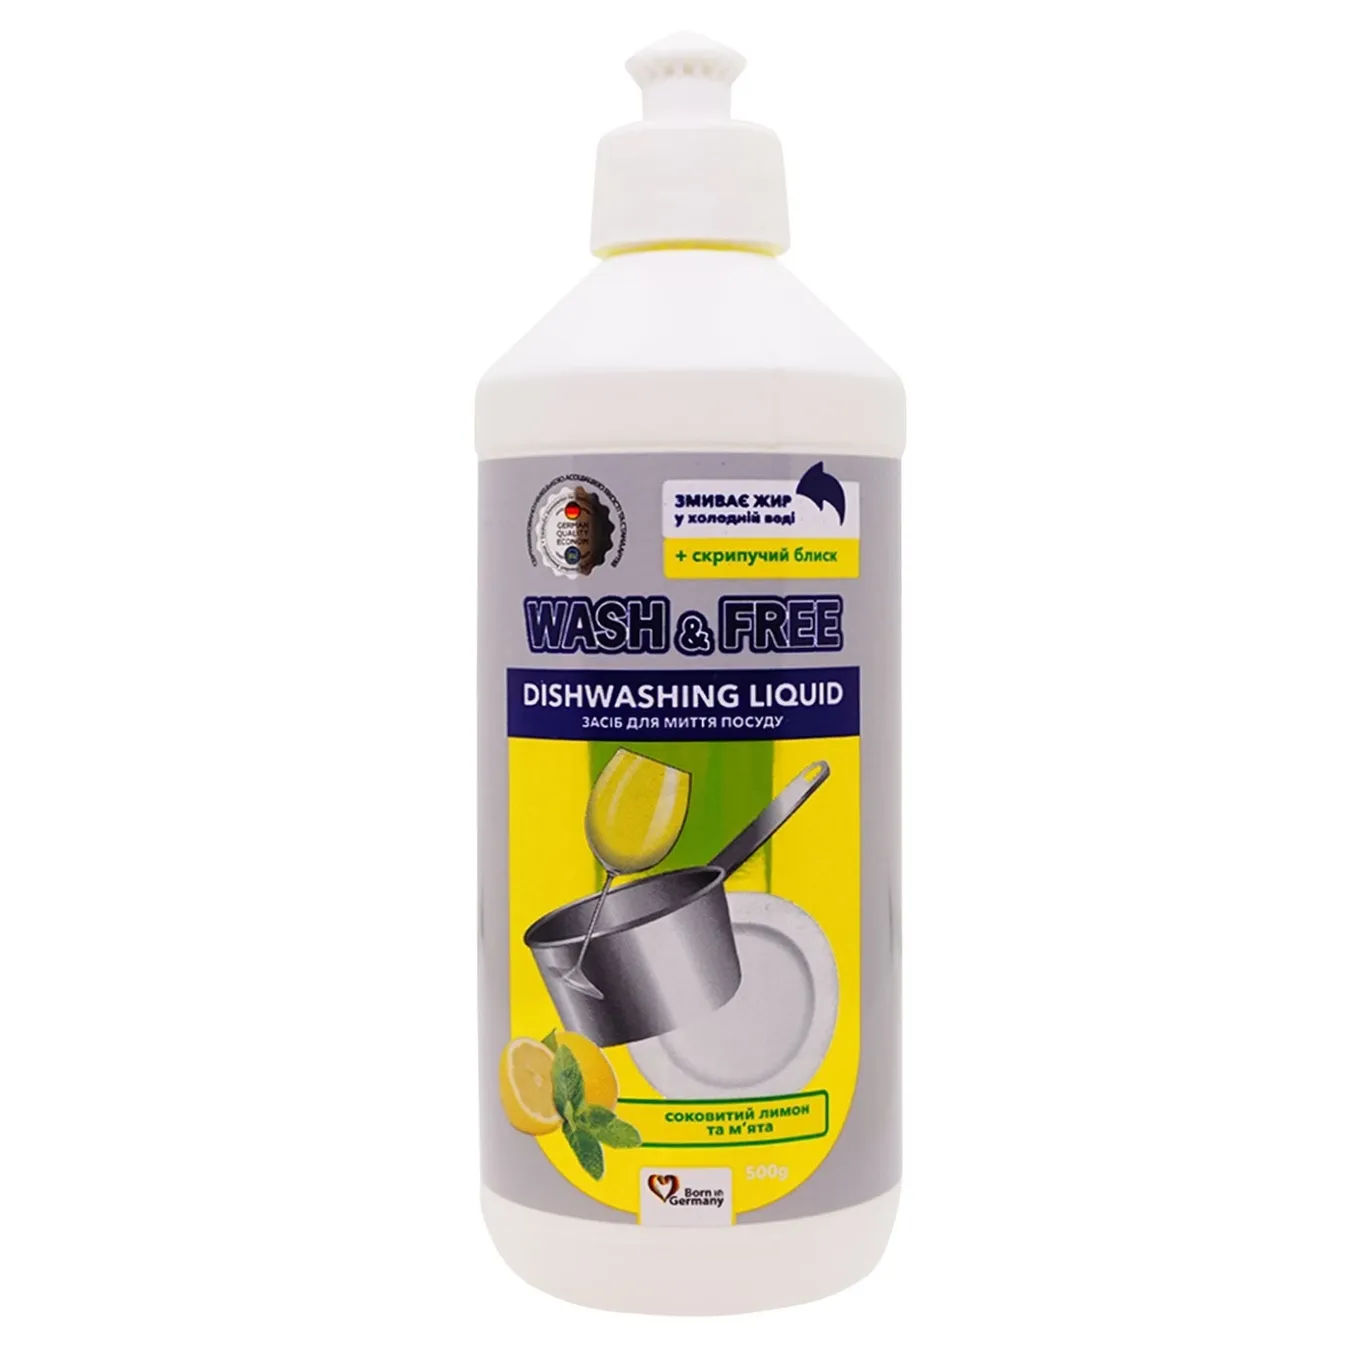 Dishwashing detergent Wash&Free lemon and mint 500g